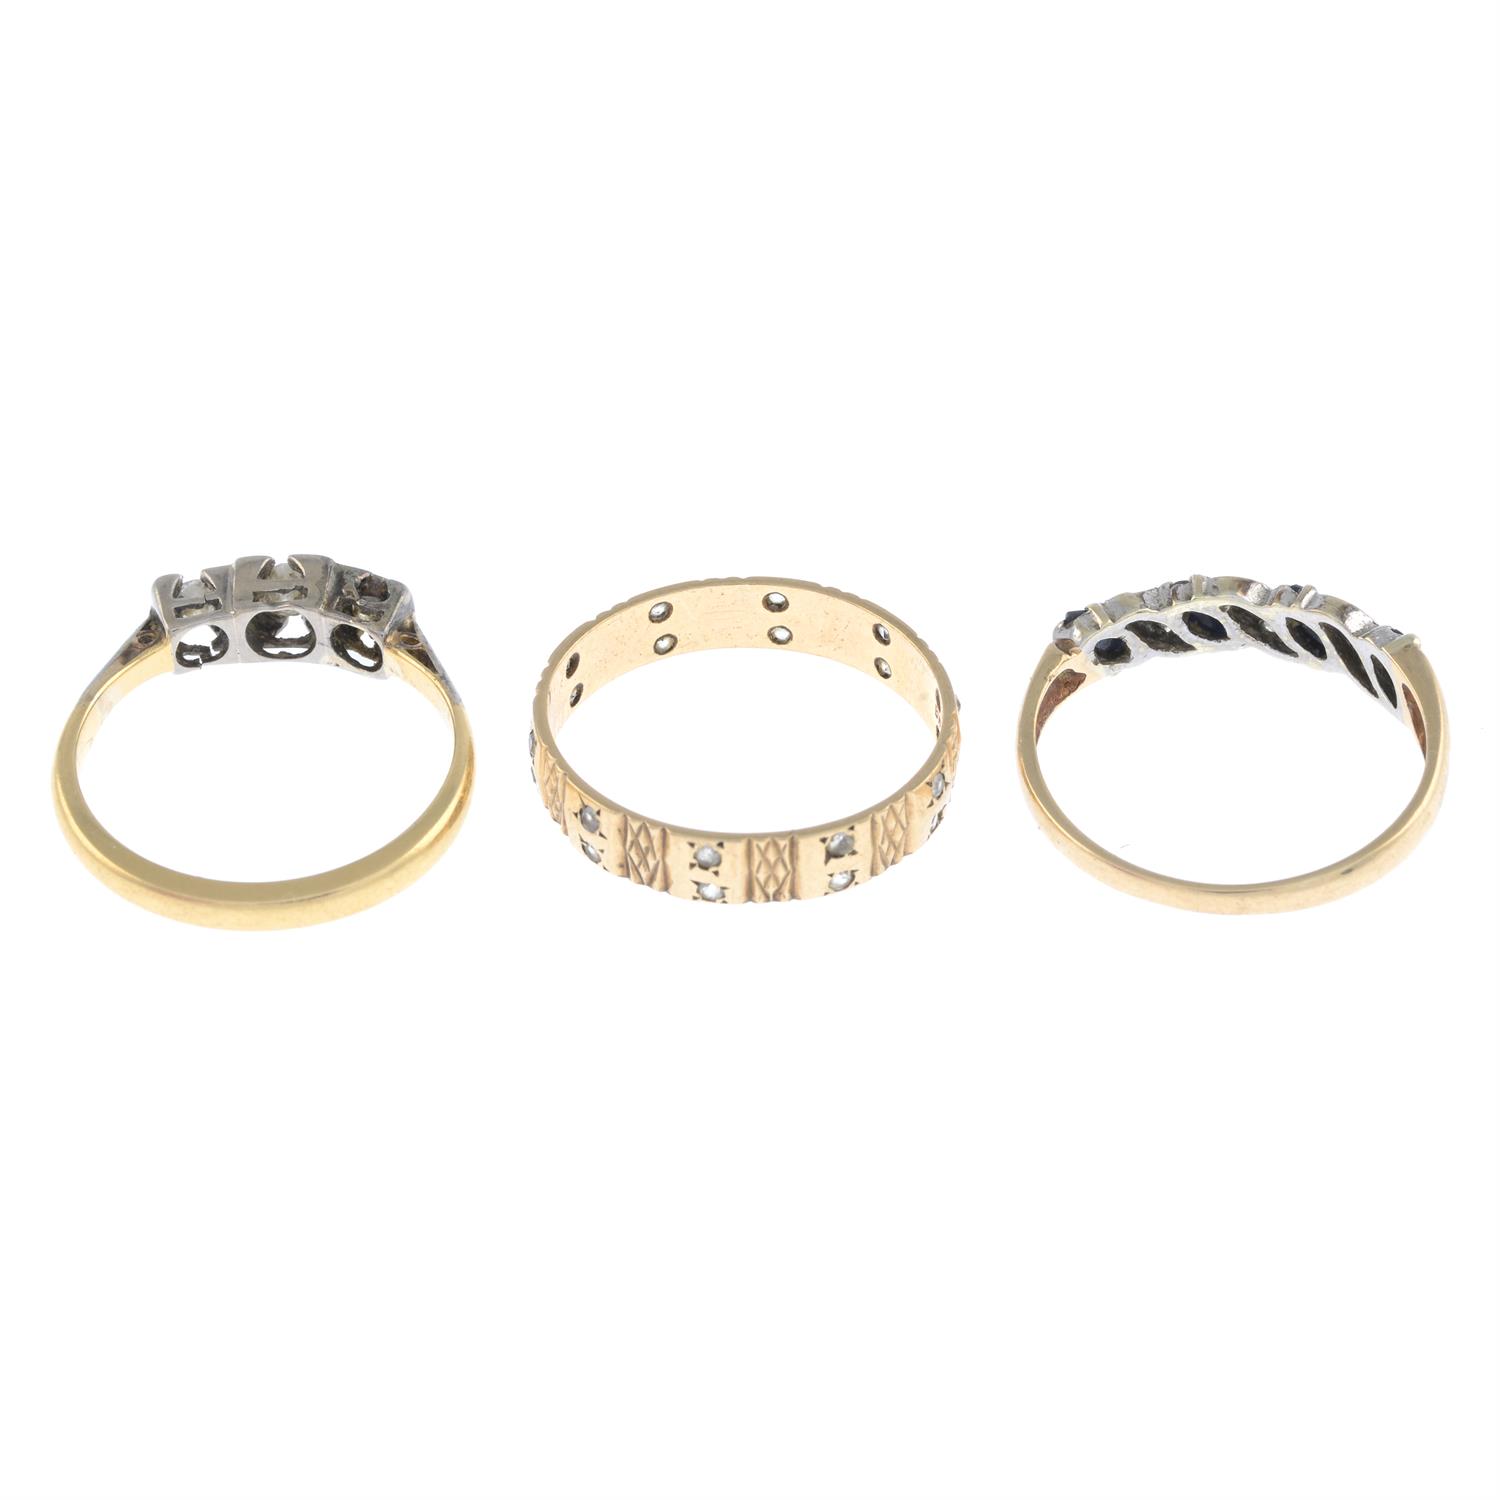 Three gem-set rings - Image 2 of 2